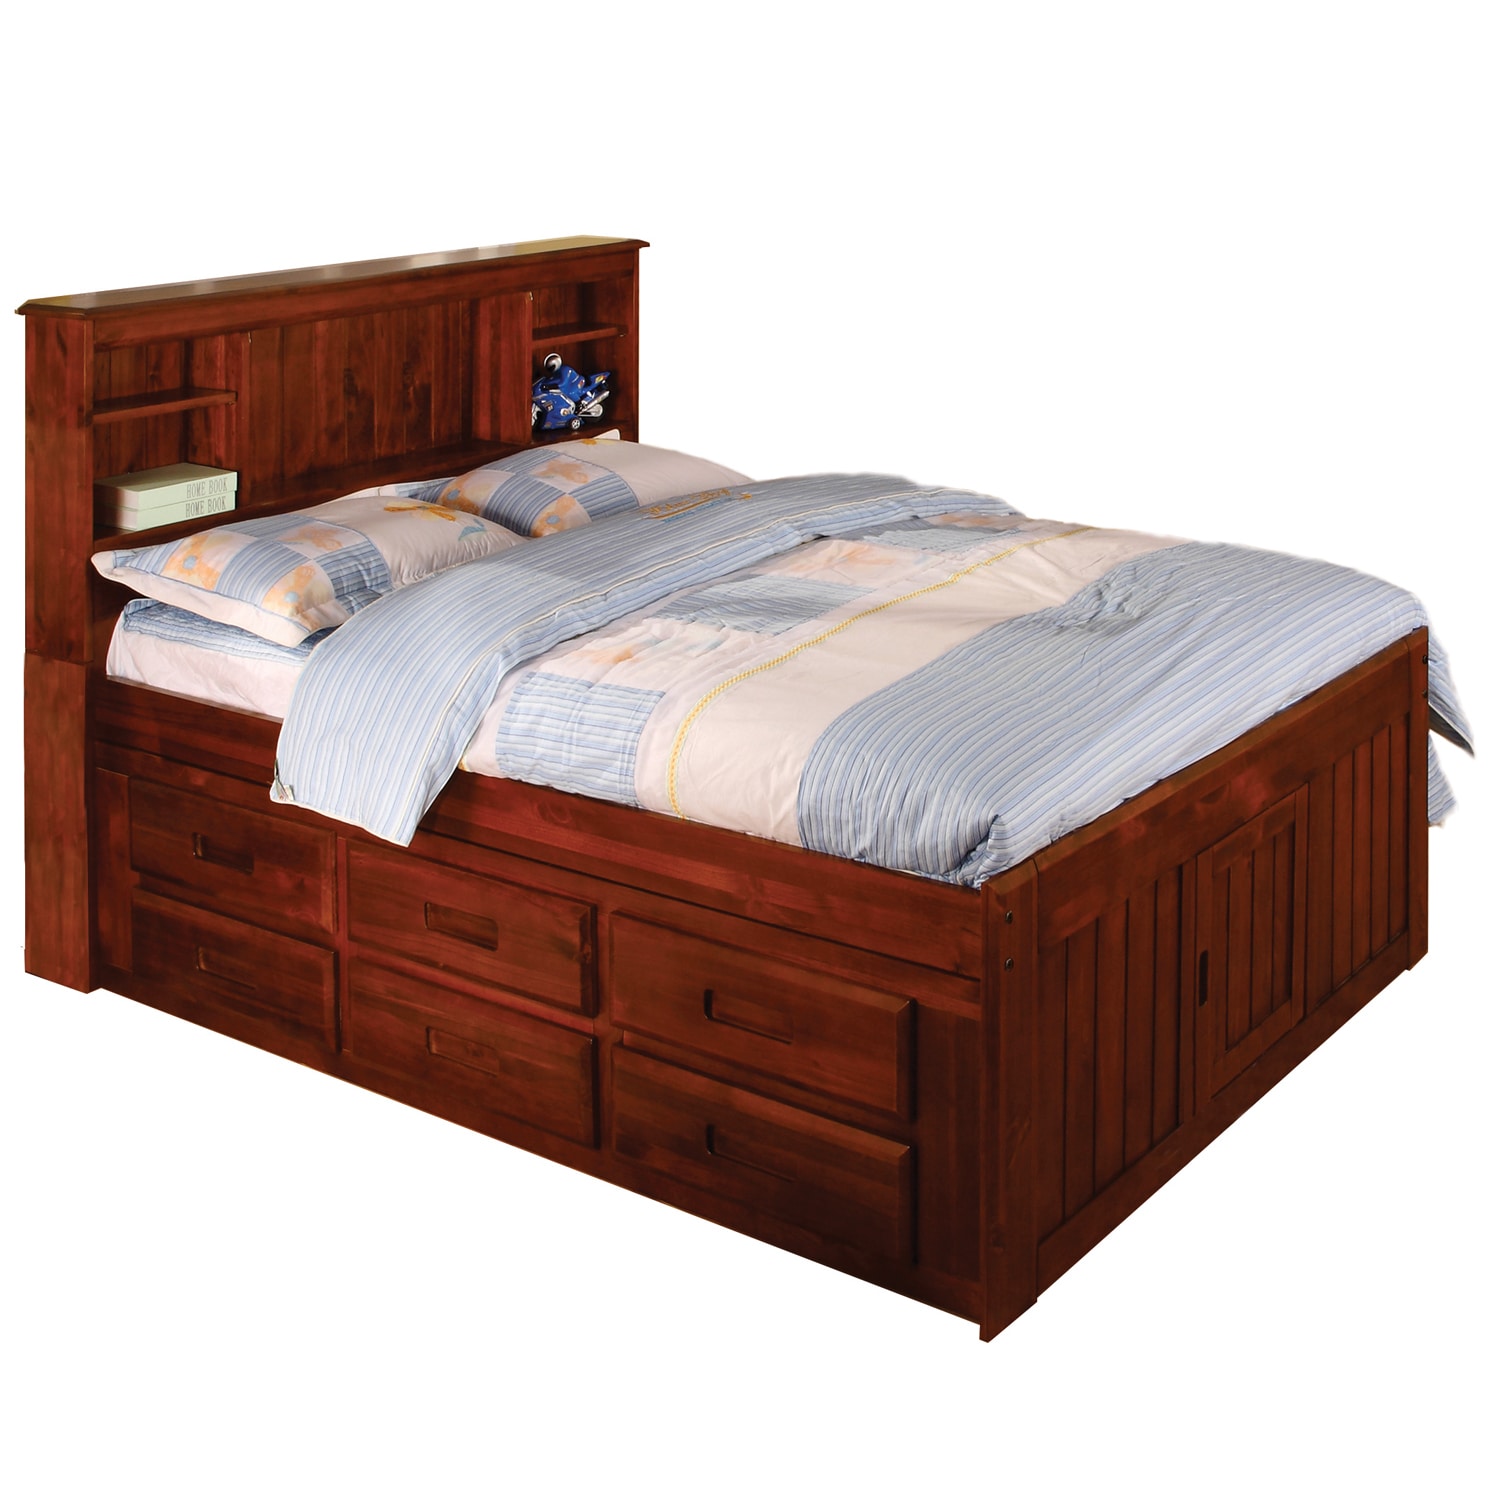 Shop Merlot Solid Pine Full Sized 12 Drawer Captain S Bed